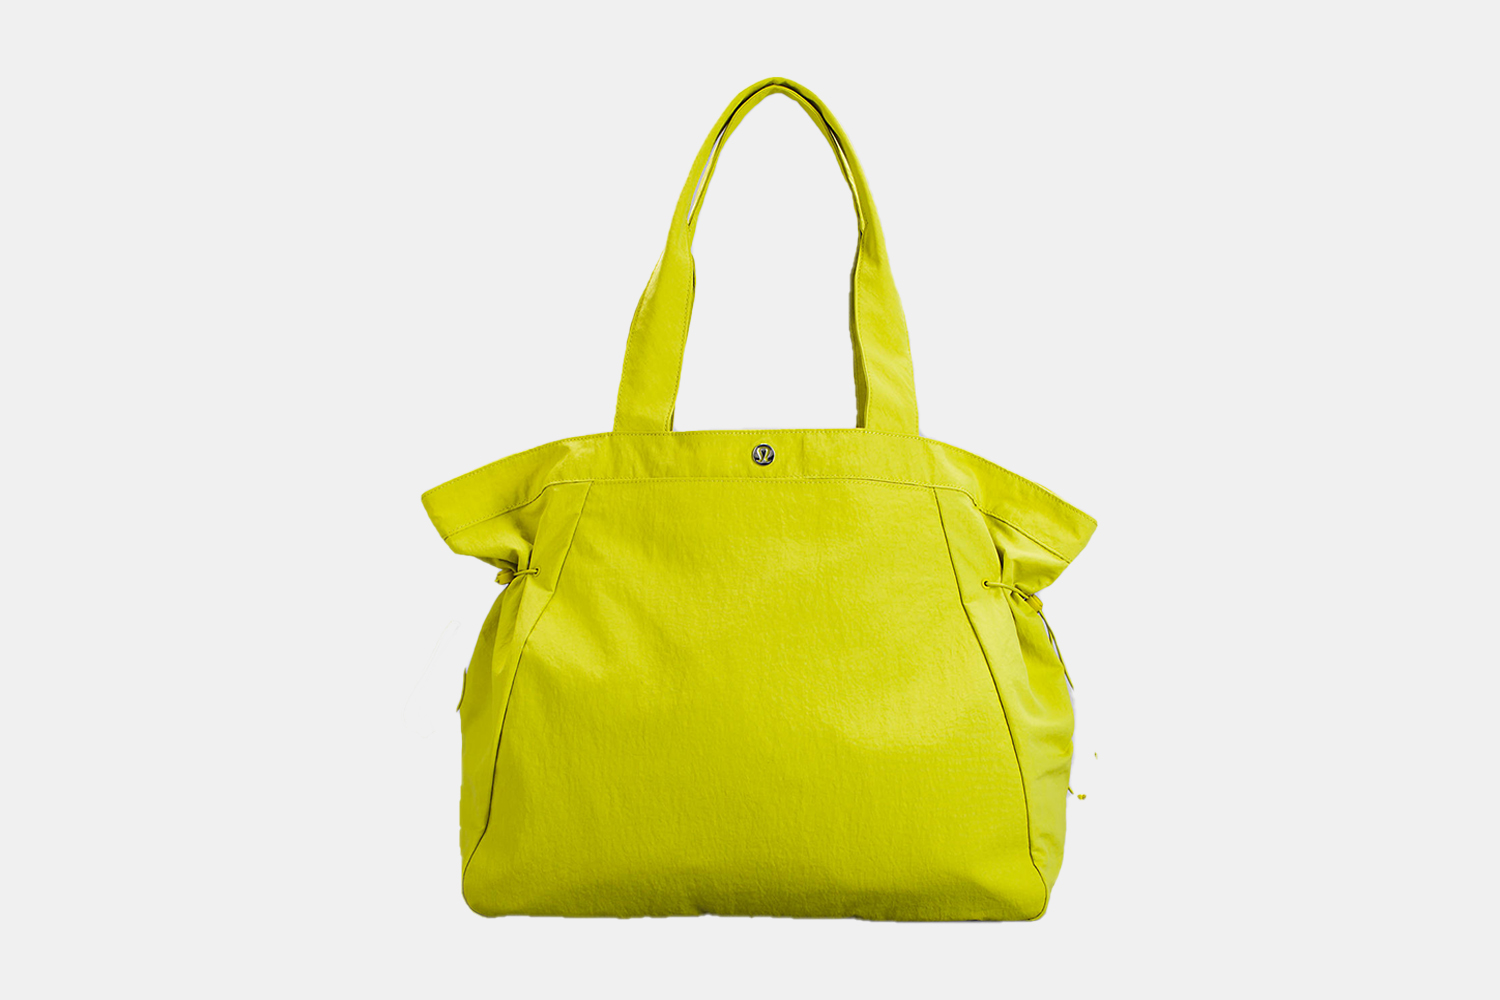 a bright yellow tote bag